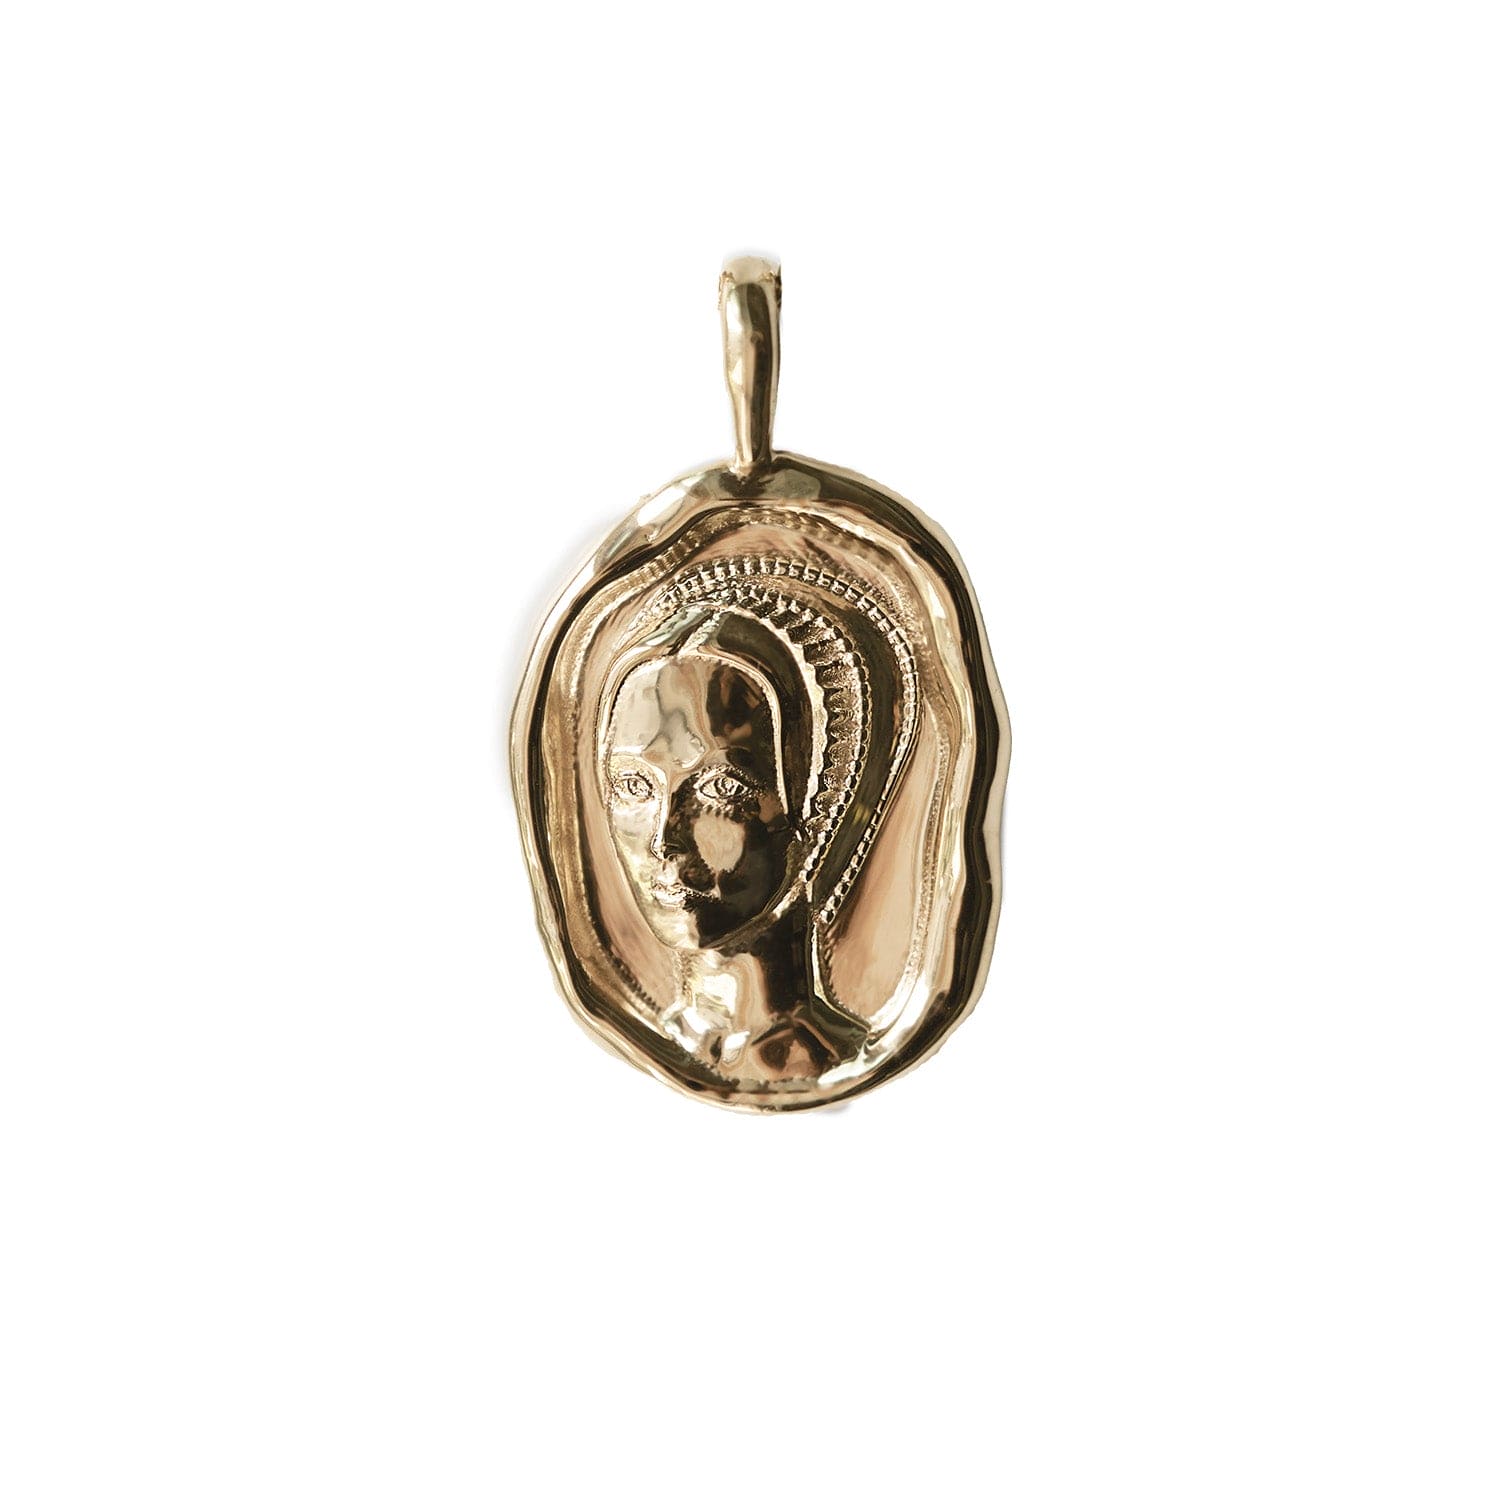 Anne Boleyn Molten Gold Pendant |  Necklaces - Common Era Jewelry